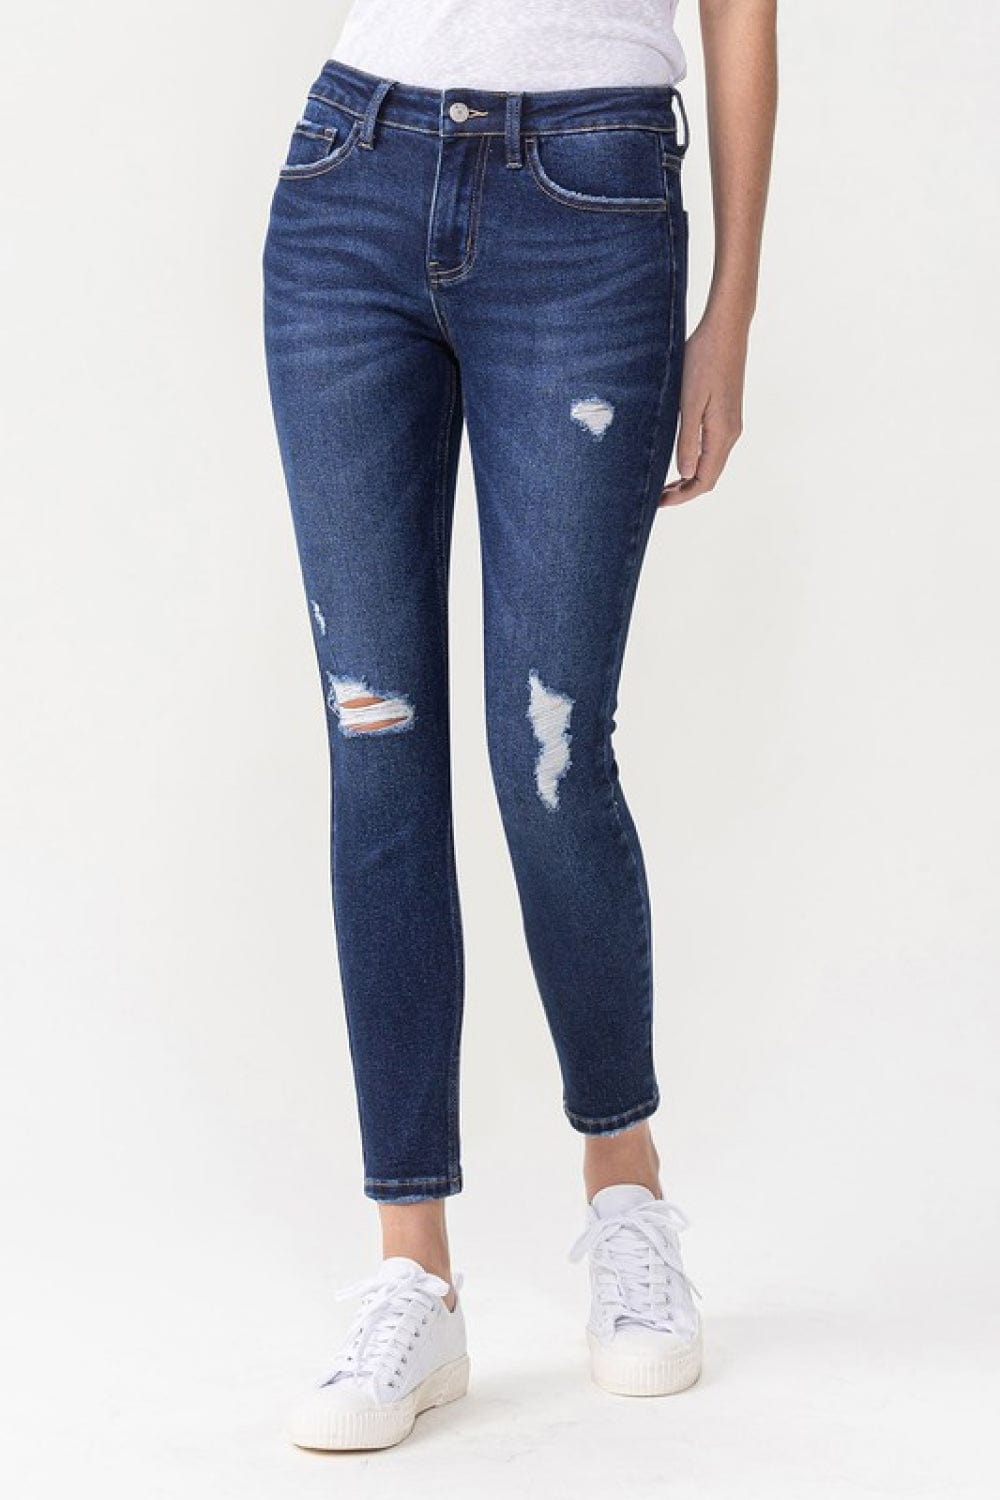 Lovervet Women's Chelsea Midrise Crop Skinny Jeans